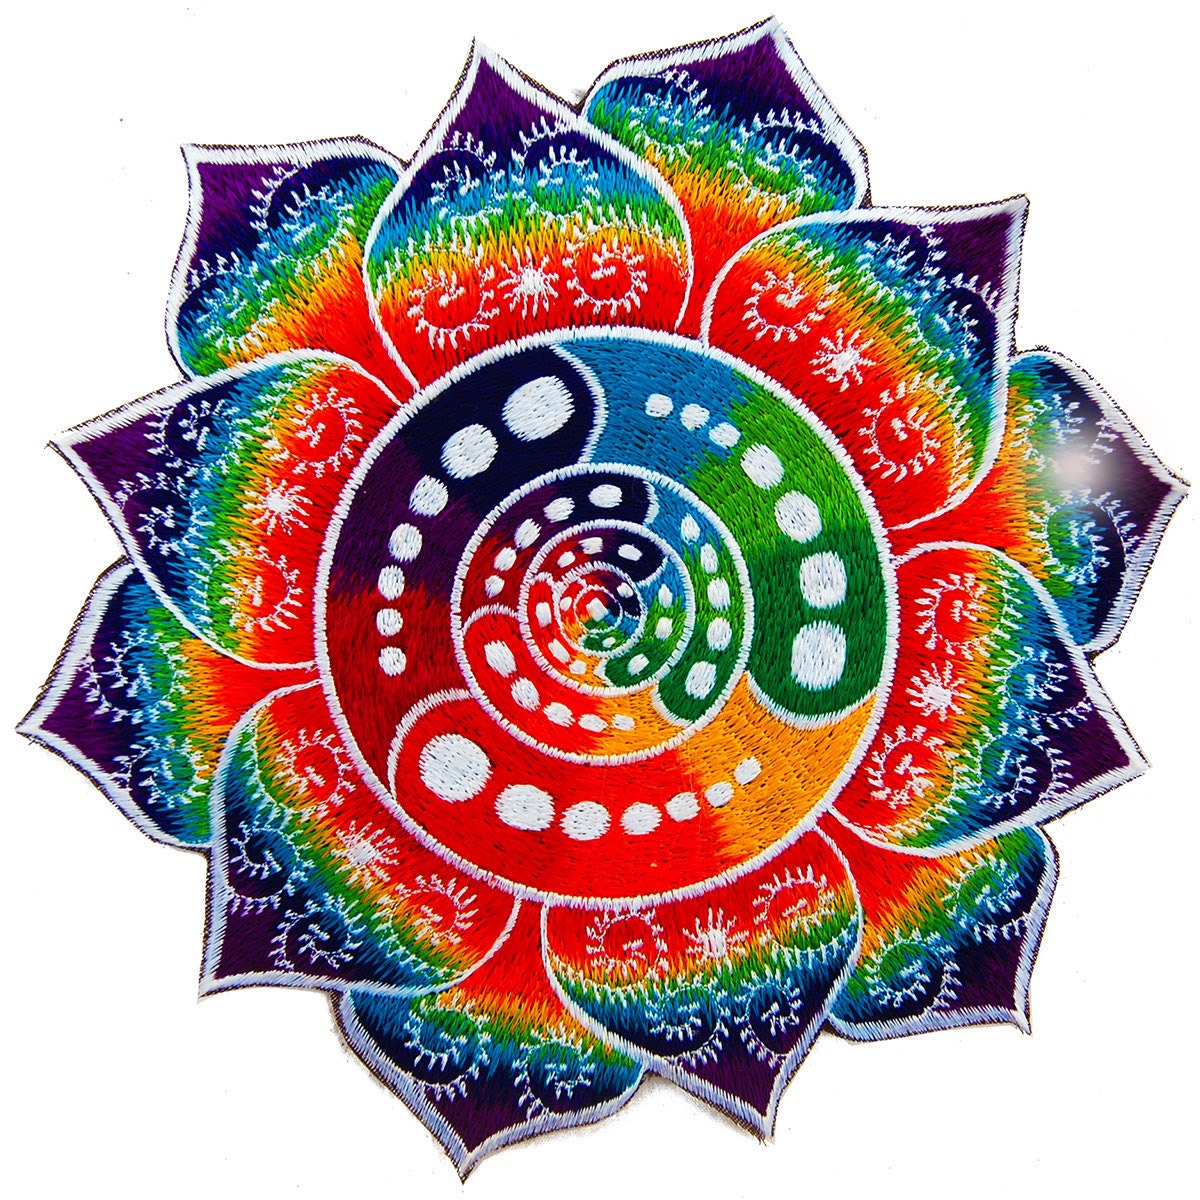 Attributes crop circle T-Shirt rainbow fractal mandala blacklight handmade embroidery no print goa t-shirt